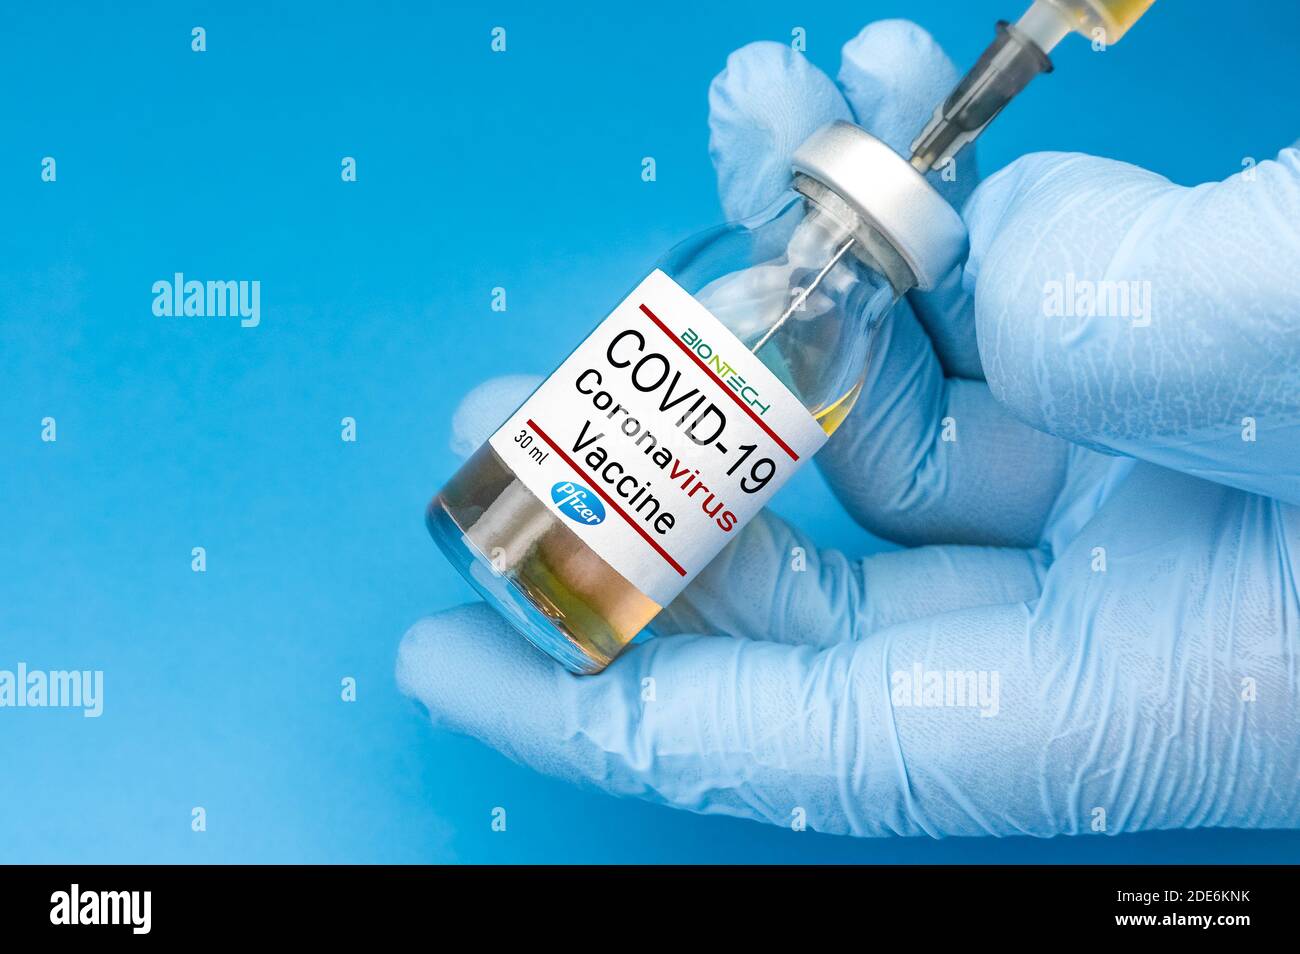 Izmir, Turkey - January 17 2021: Coronavirus vaccine concept and background. New vaccine pfizer and biontech isolated on blue background. Covid-19 Stock Photo